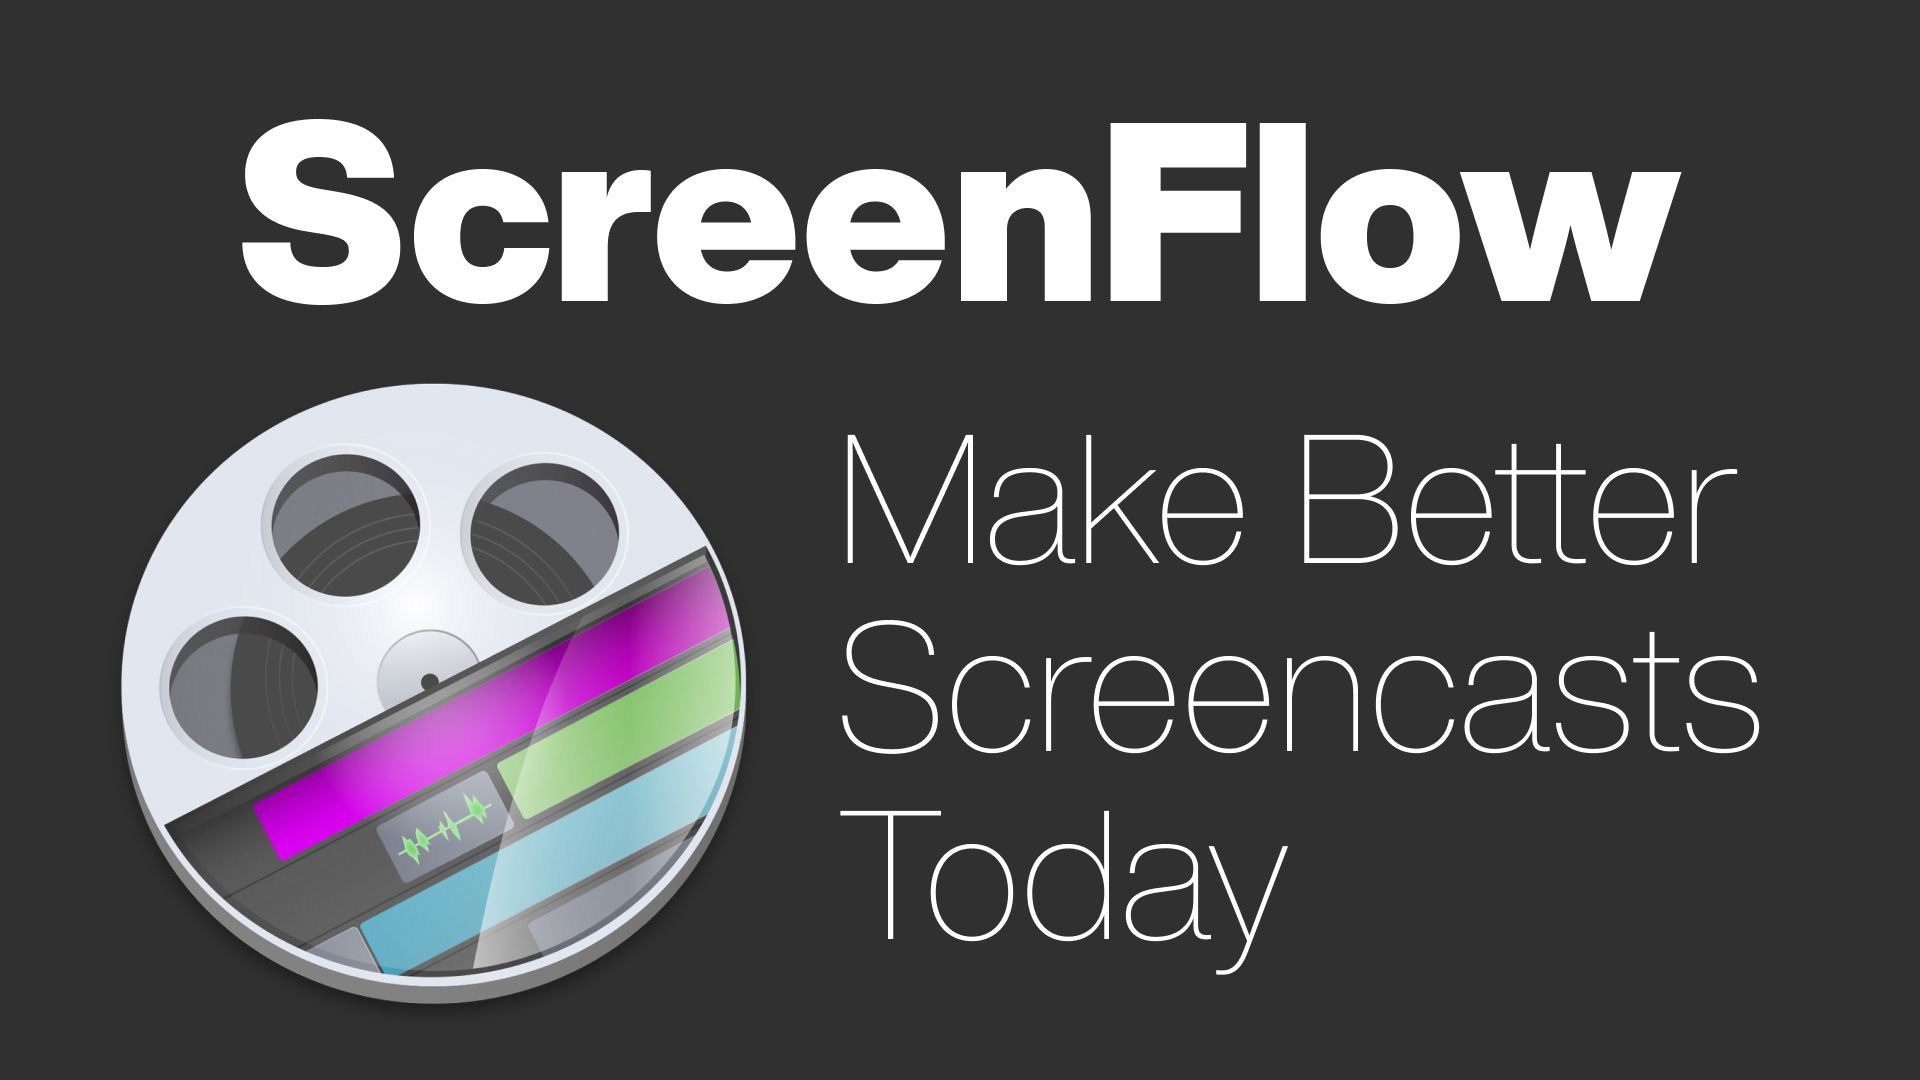 screenflow logo